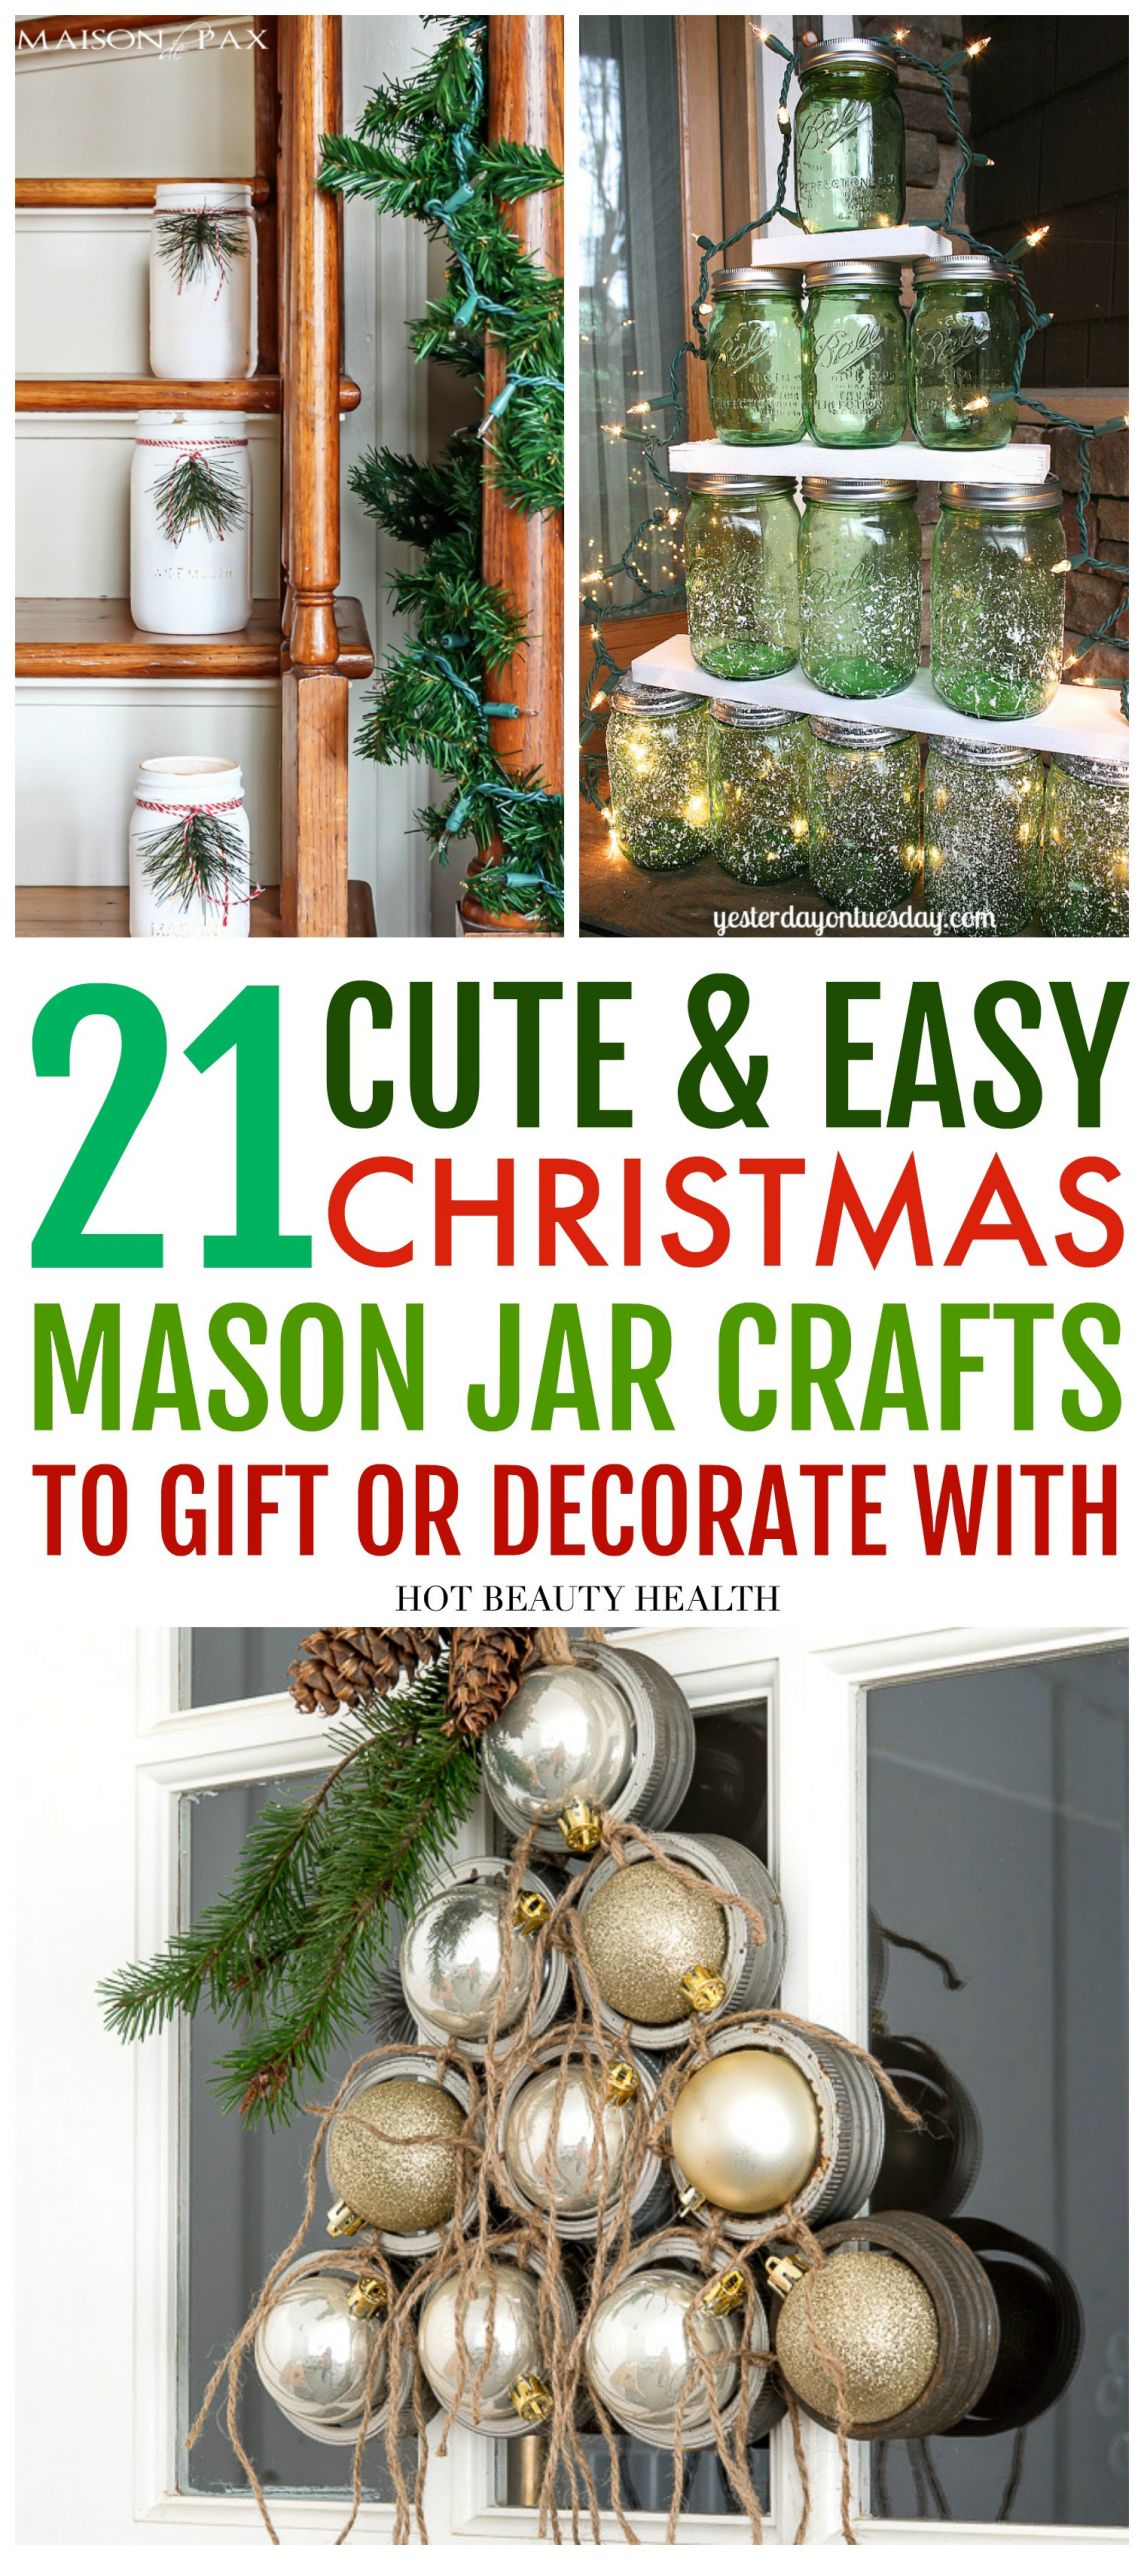 Mason Jar DIY Christmas Gifts
 21 DIY Christmas Mason Jars to Gift or Decorate With Hot